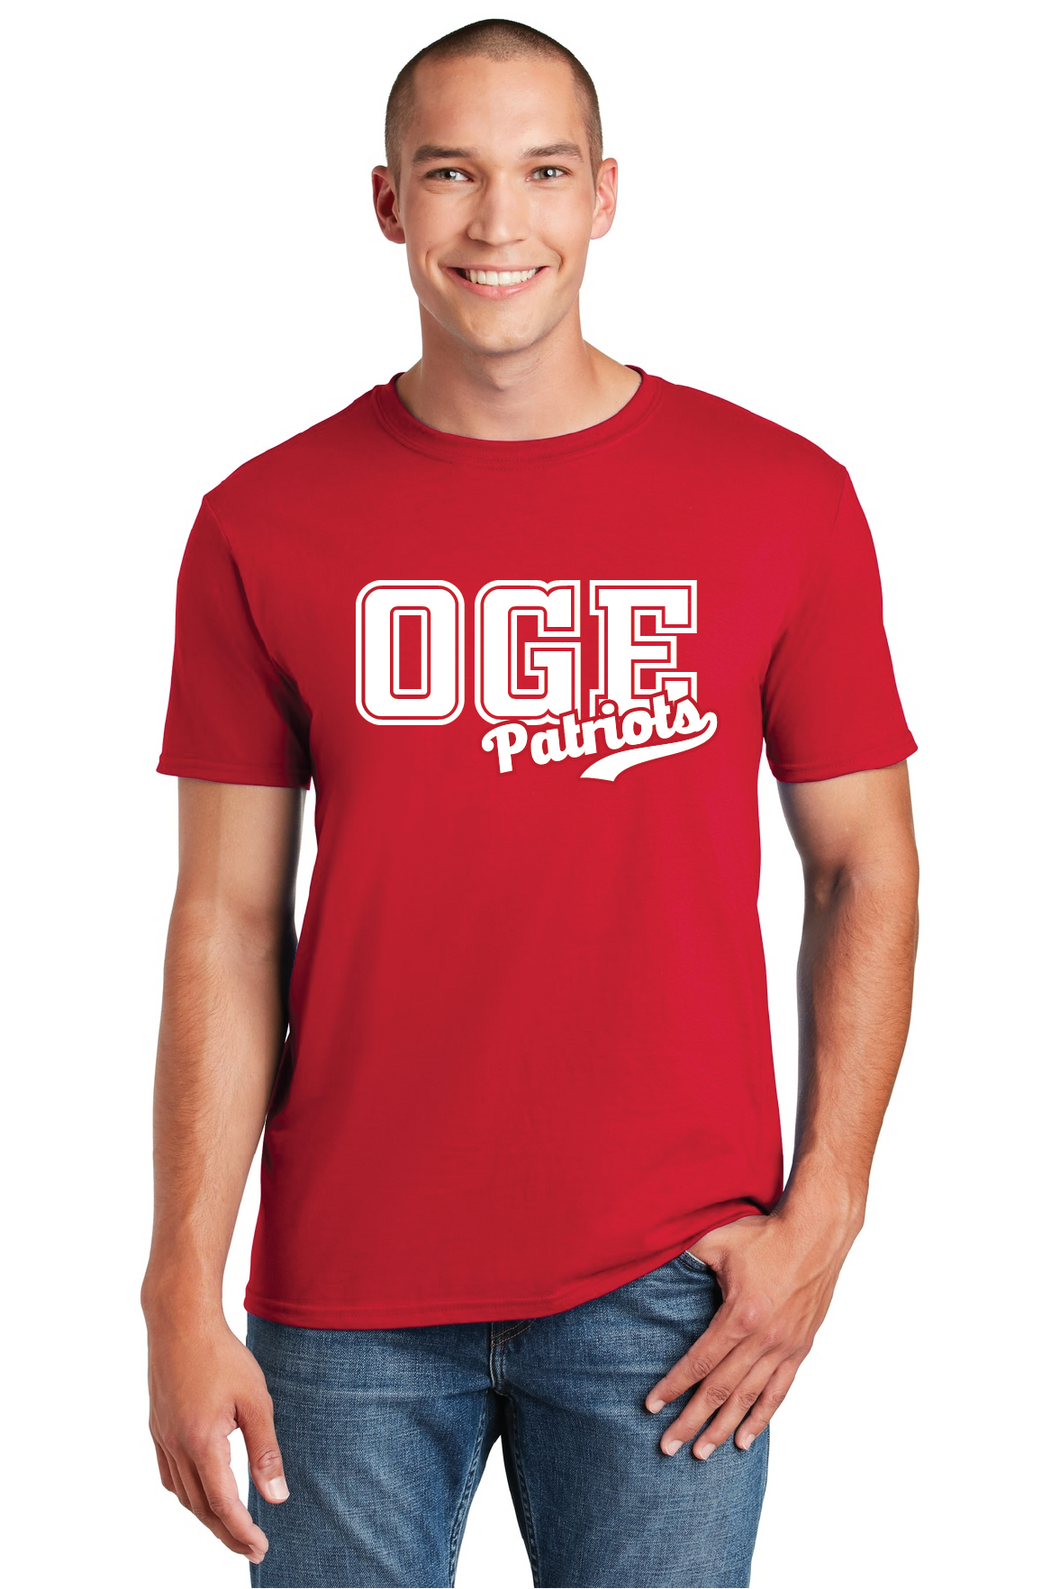 OGE Patriot T-shirts